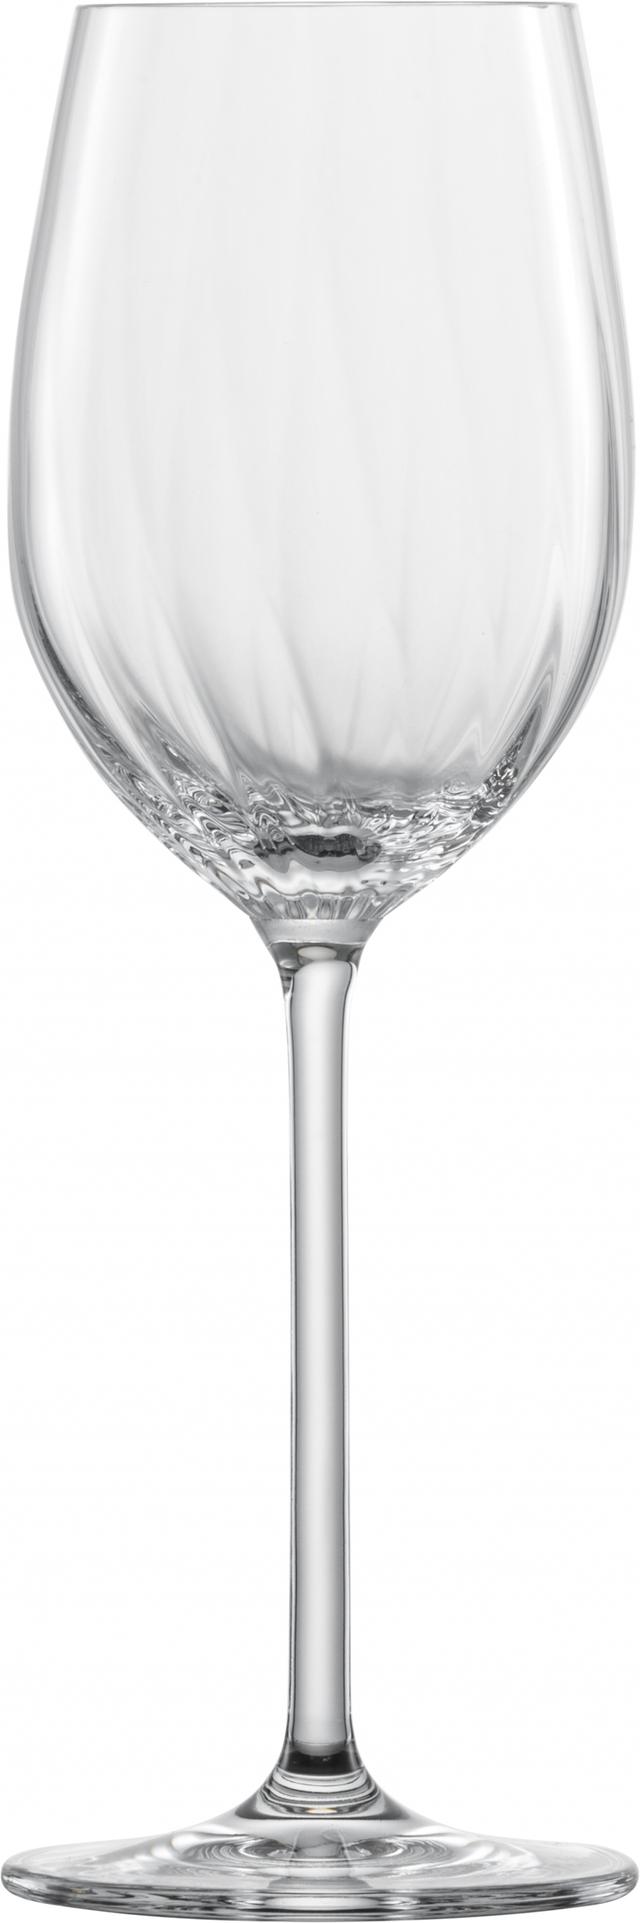 zwiesel glas prizma witte wijnglas 2 - 0.296 ltr - geschenkverpakking 2 glazen